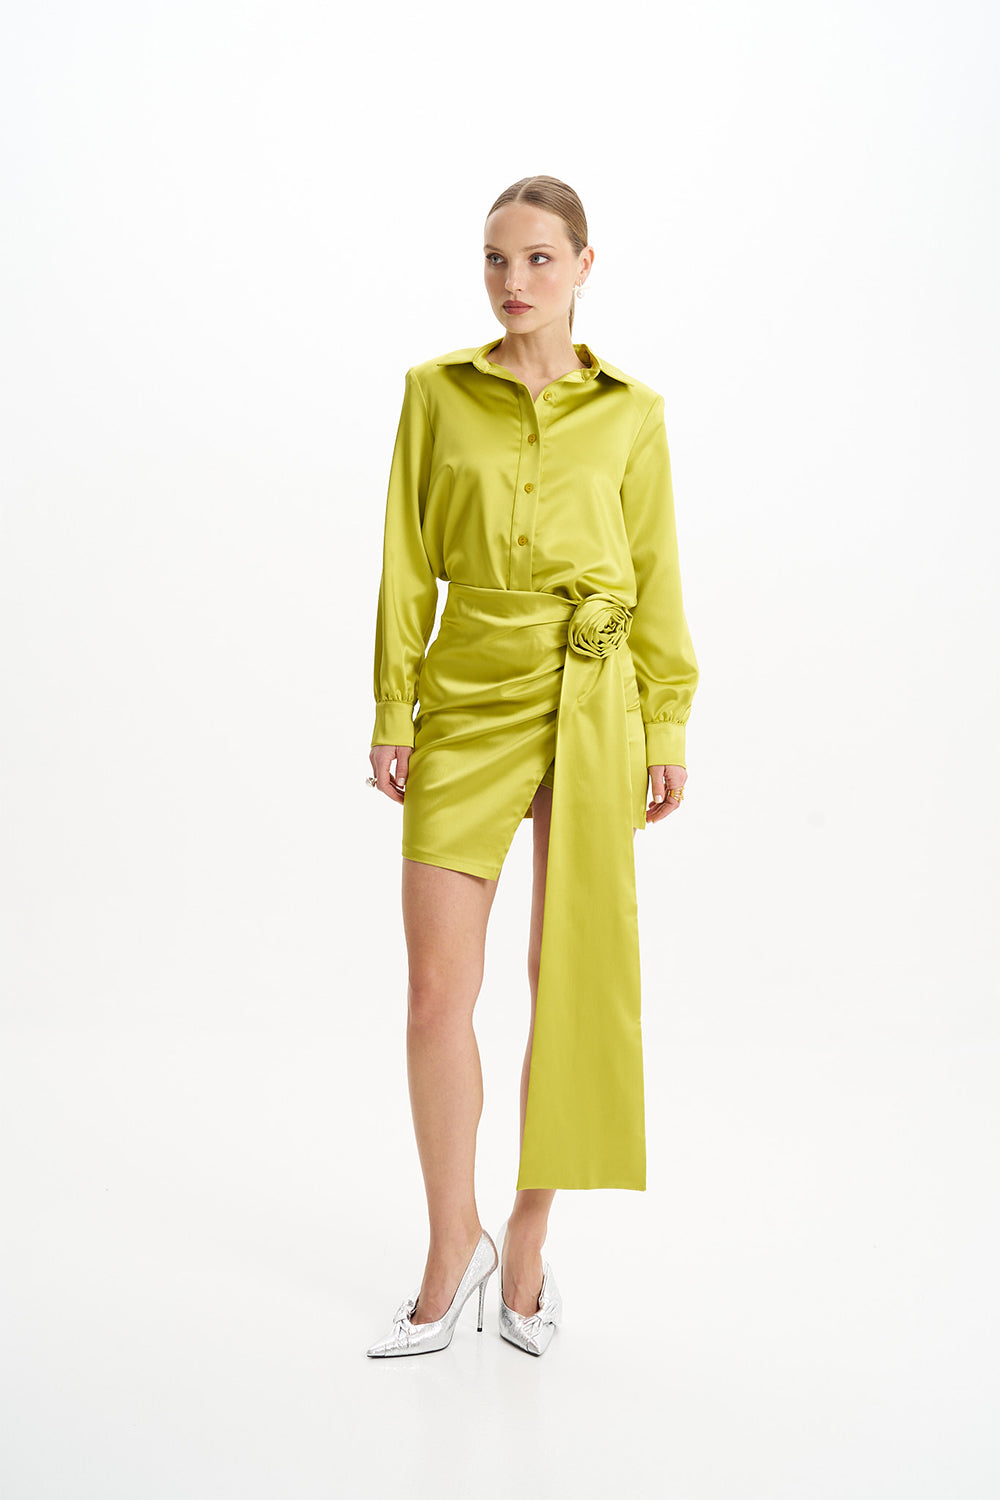 Maia Green Flower Skirt